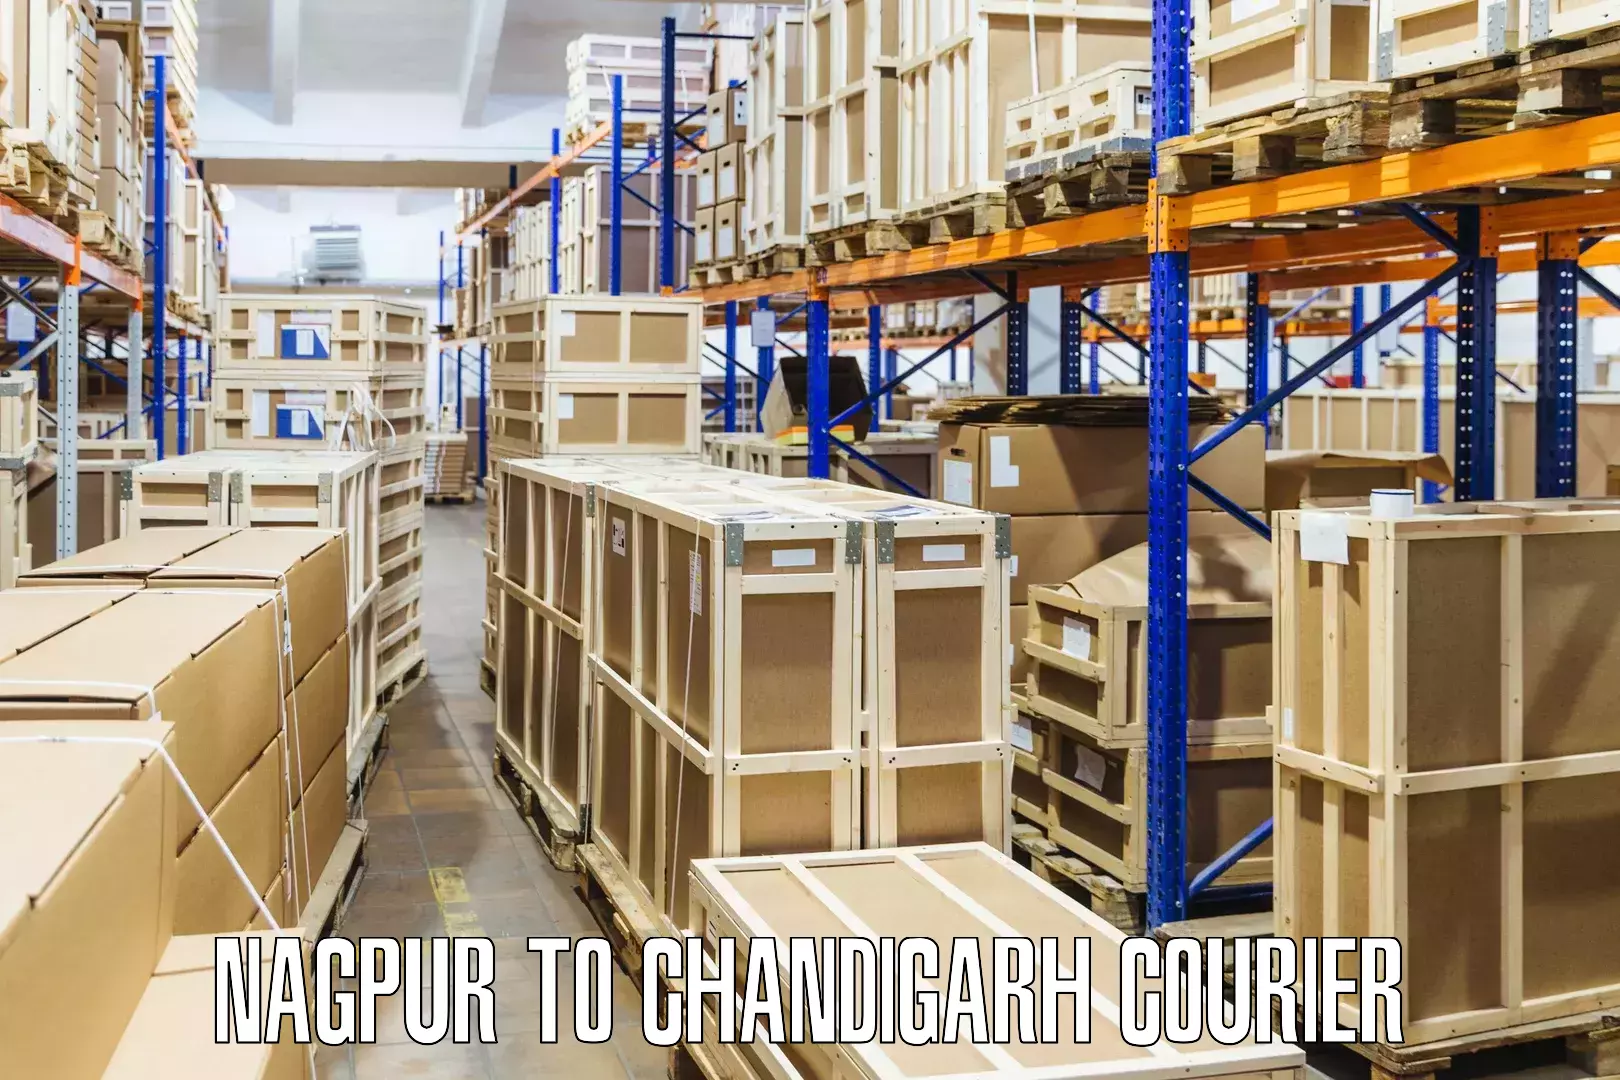 Express logistics Nagpur to Chandigarh